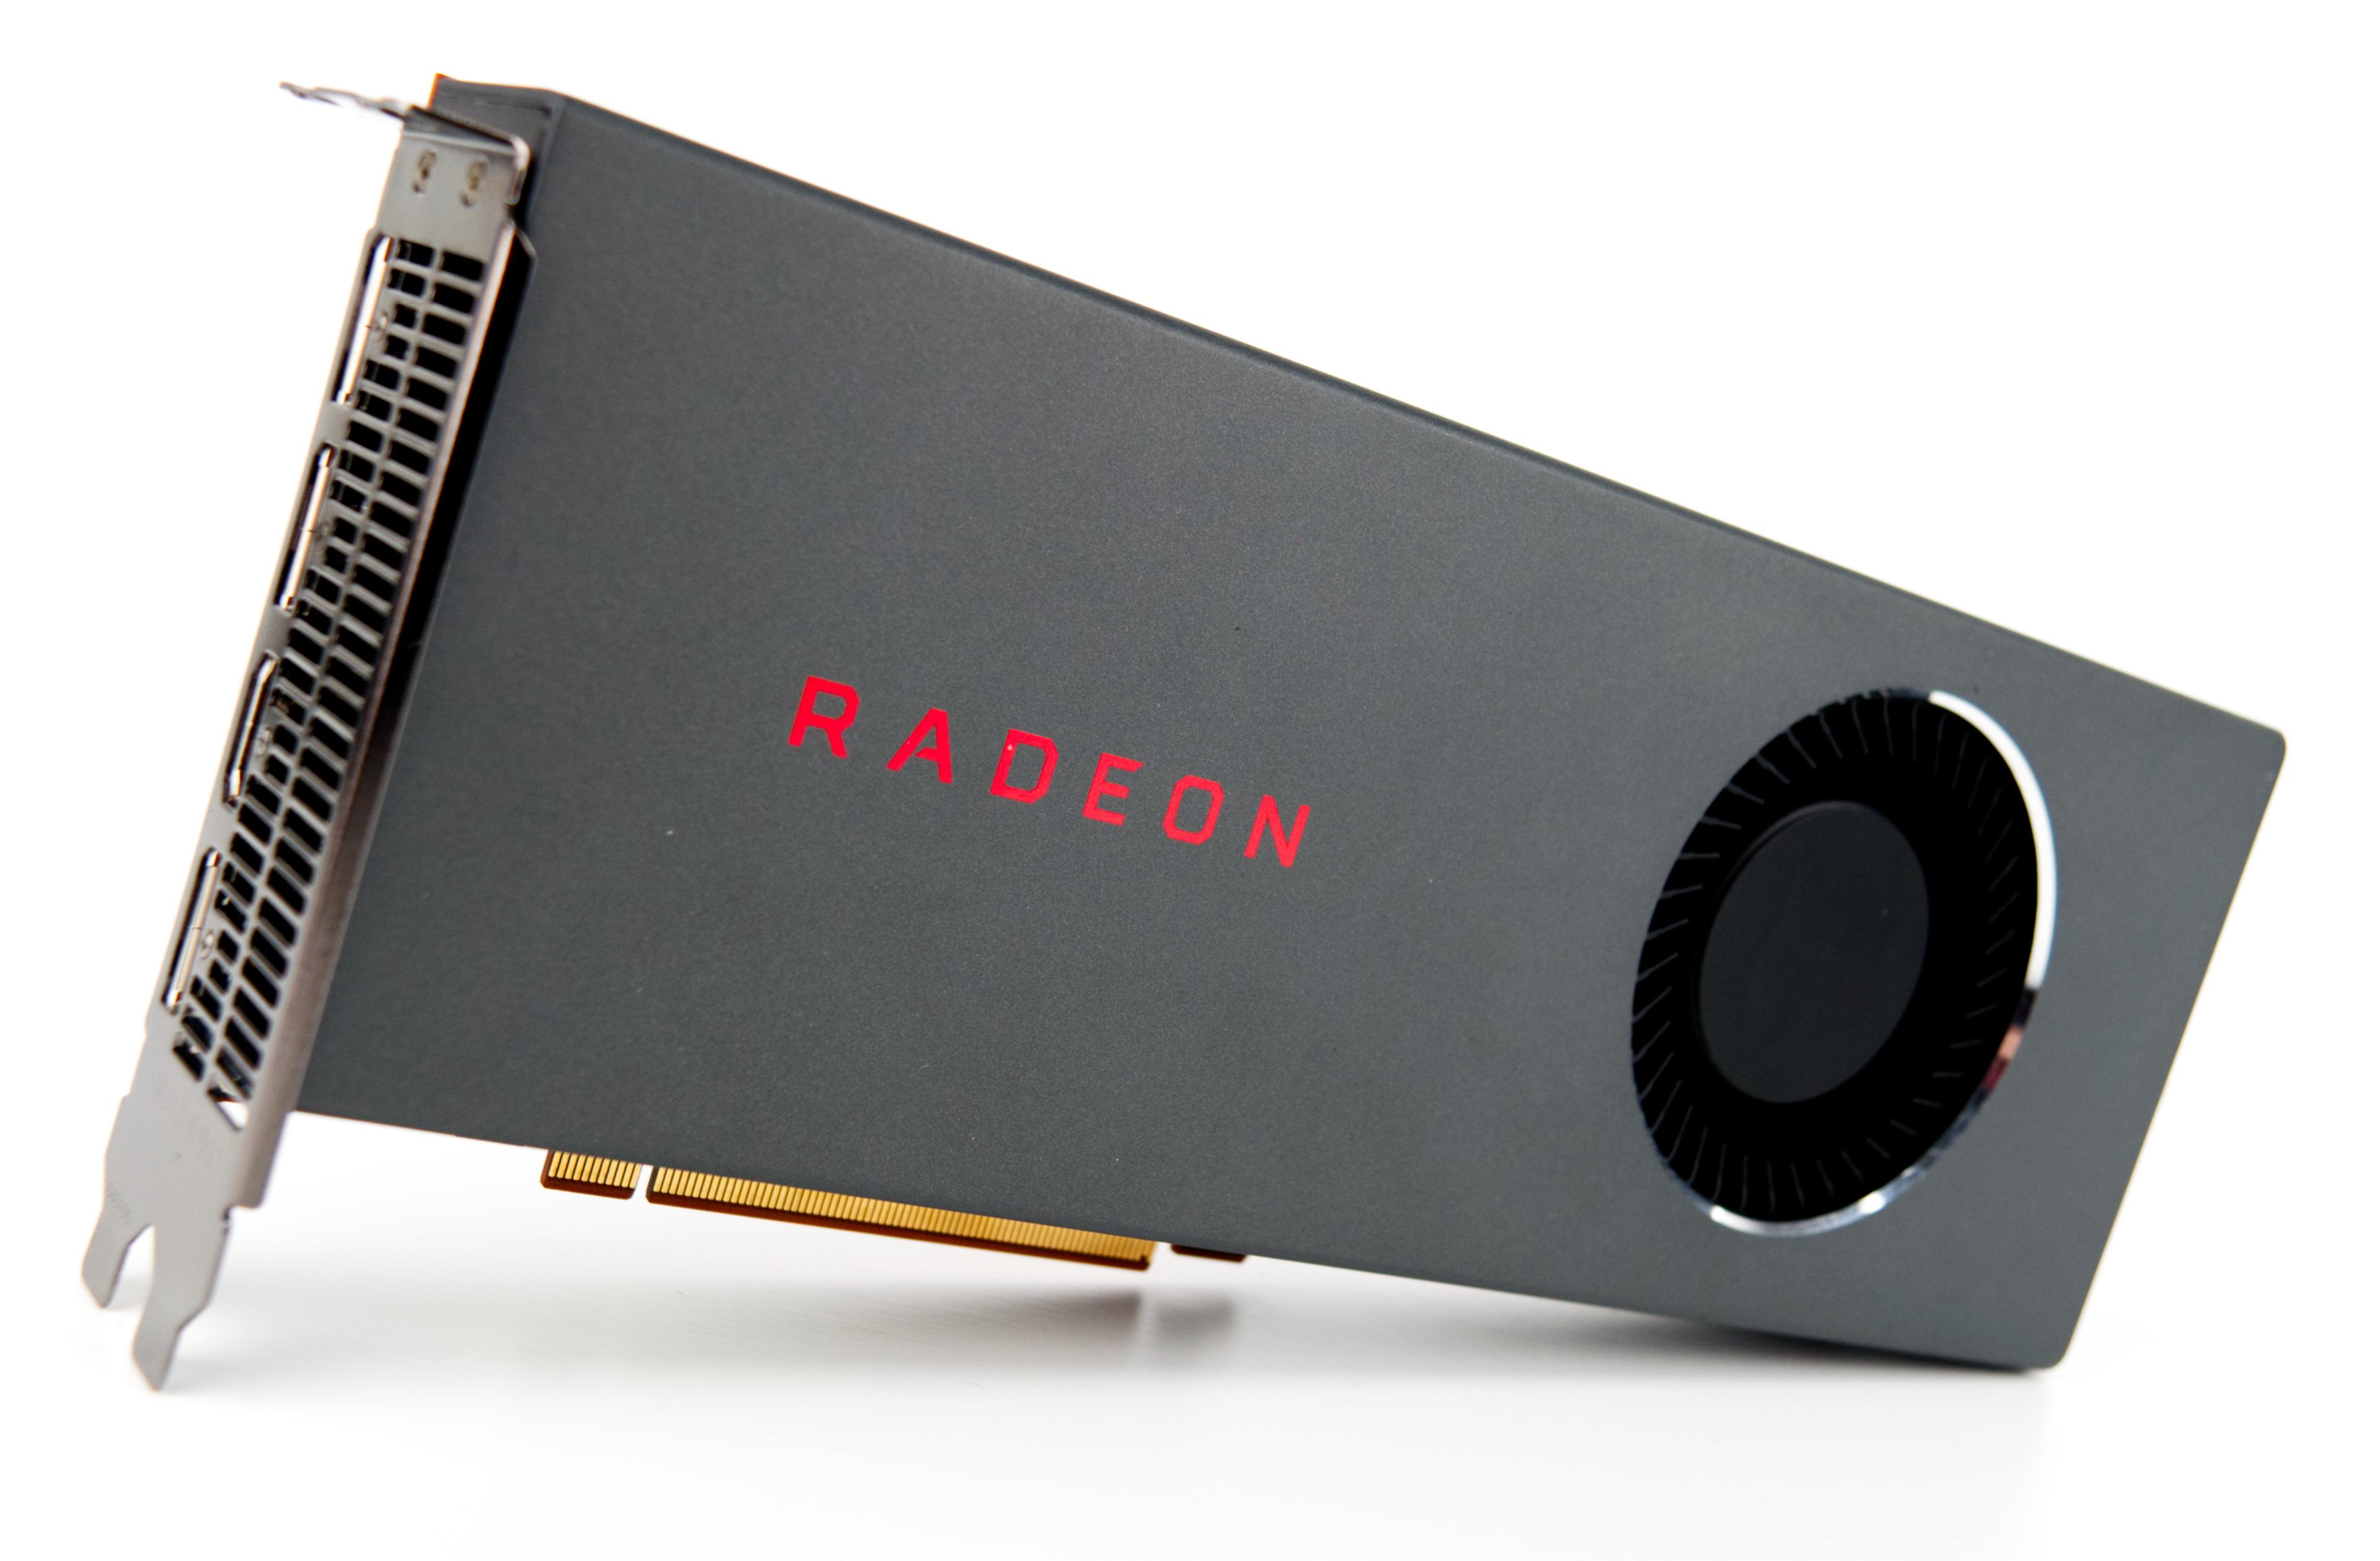 Ati radeon 5700. Rx5700 reference. AMD Radeon RX 5700. RX 5700 8gb. AMD 5700 видеокарта.